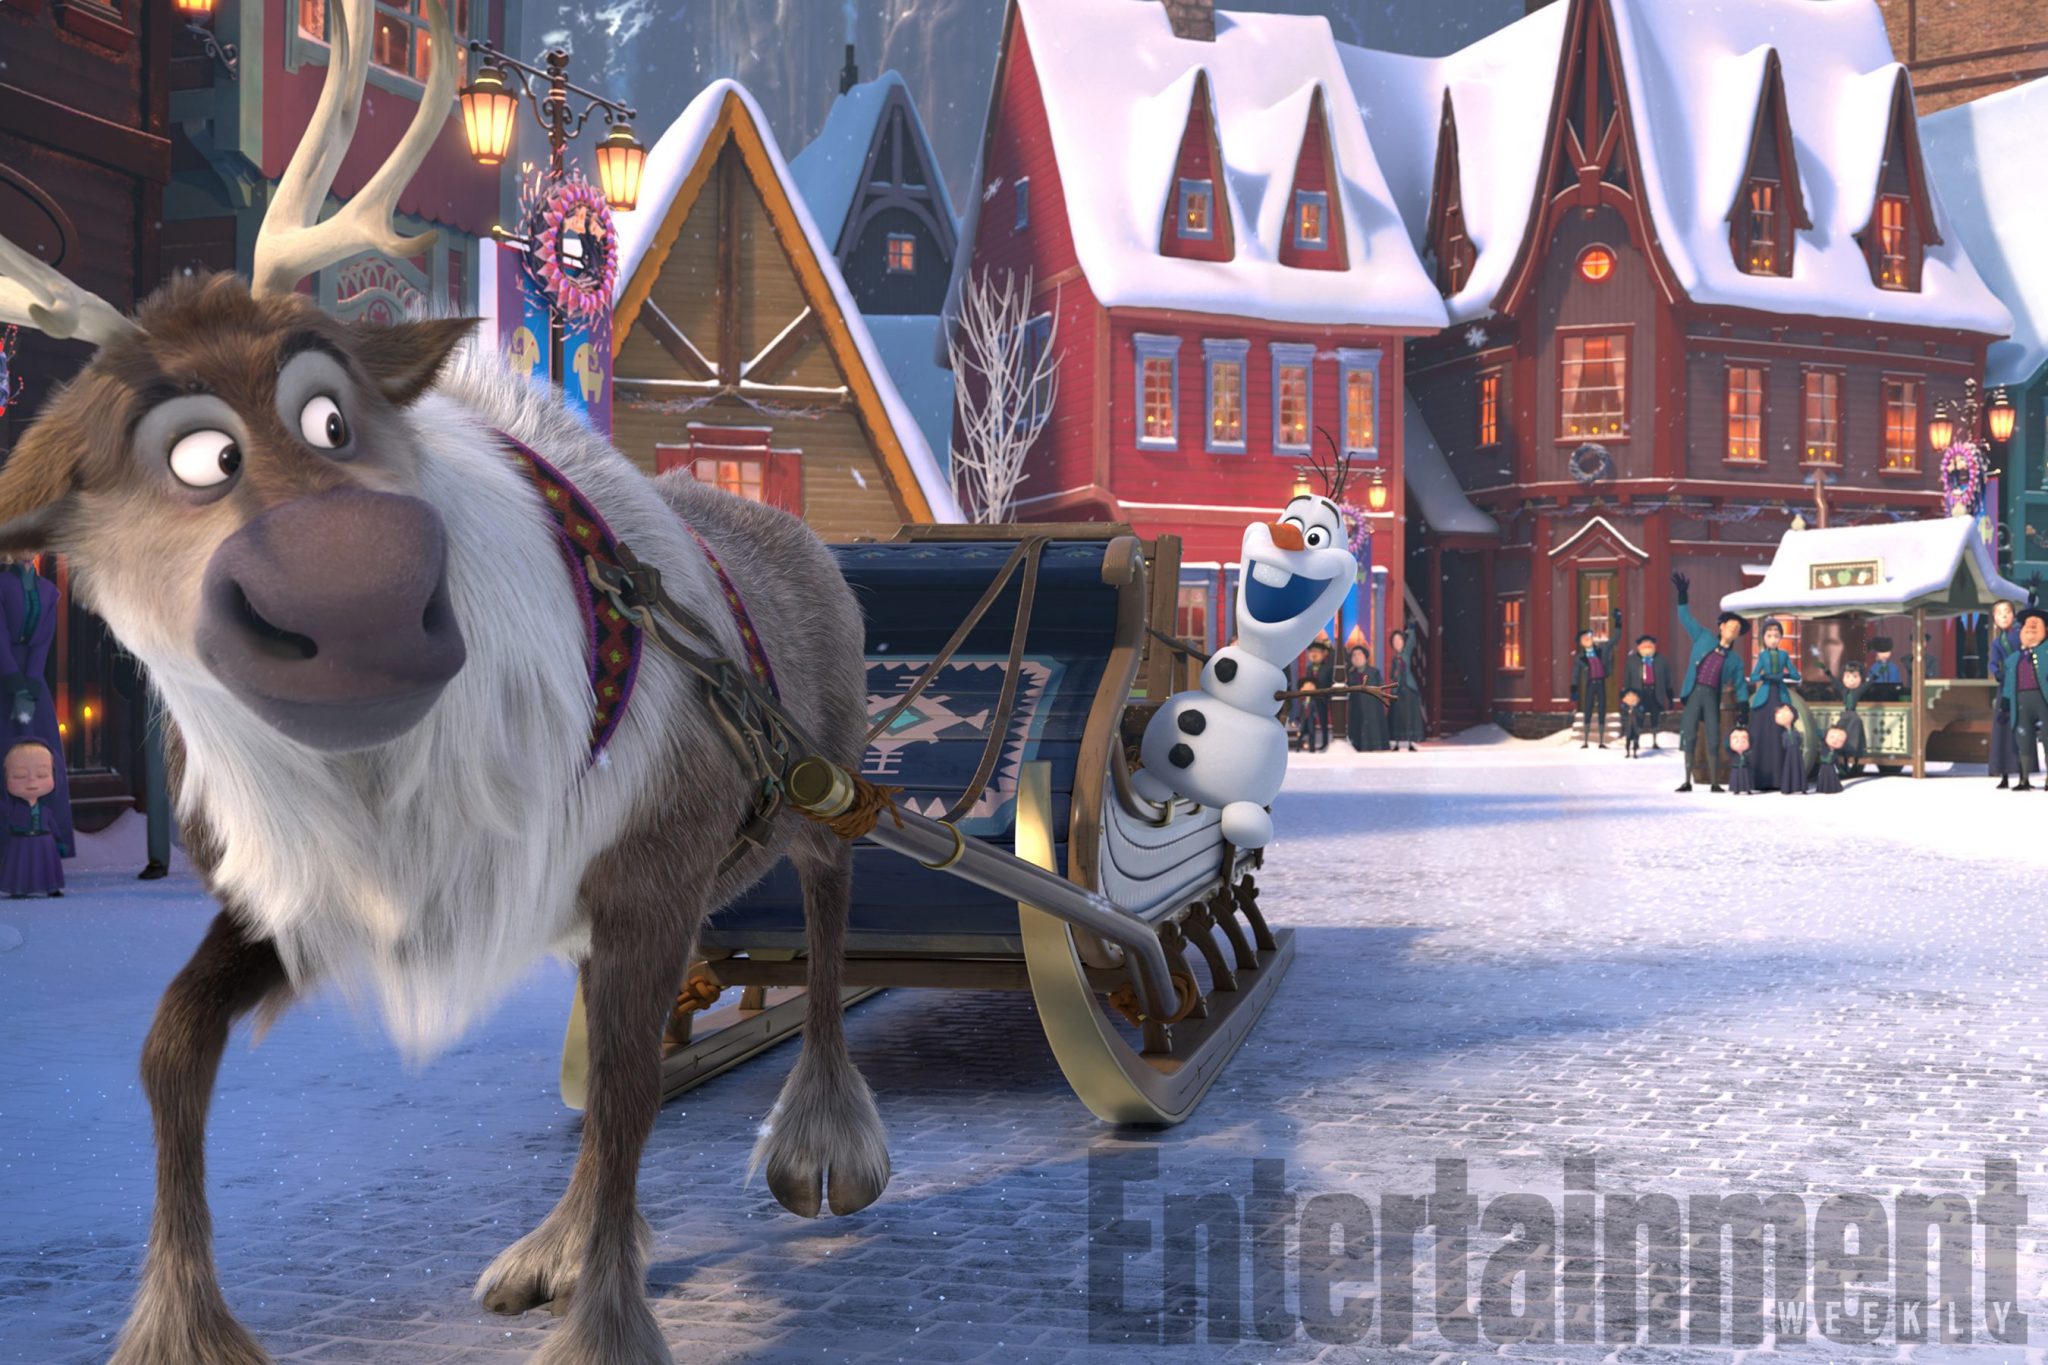 Olaf’s Frozen Adventure to Debut Ahead of Disney-Pixar’s Coco